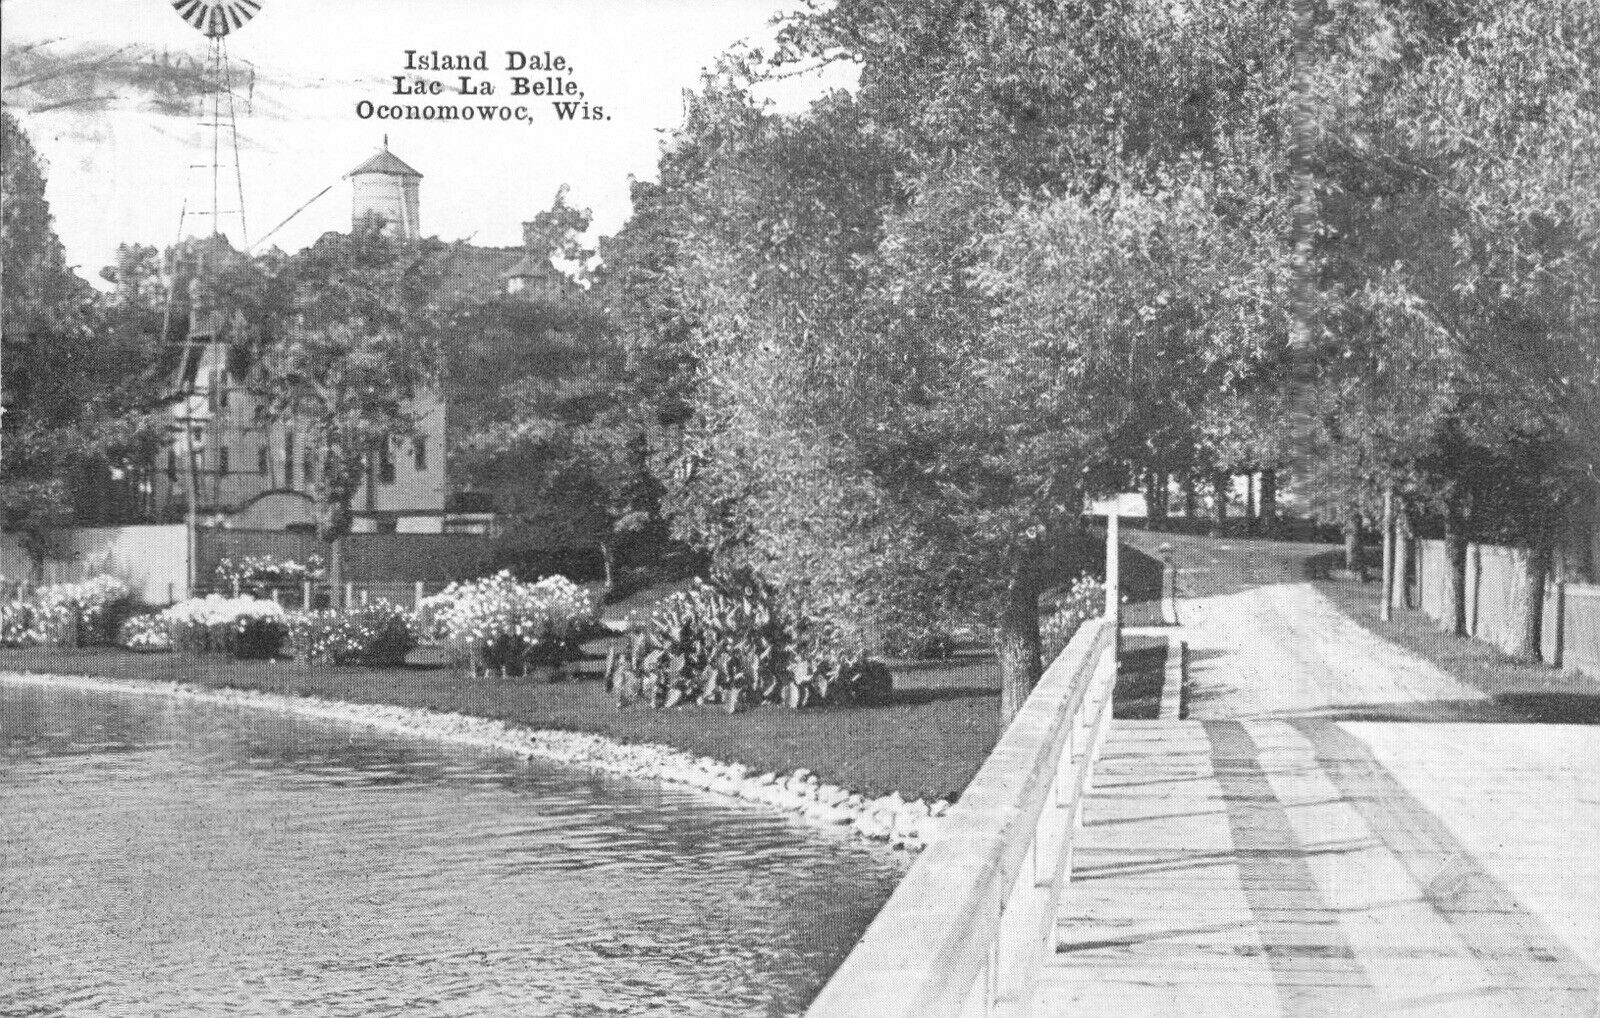 OCONOMOWOC, Wisconsin, LAC LA BELLE, Island Dale 1923 ANTIQUE Postcard 